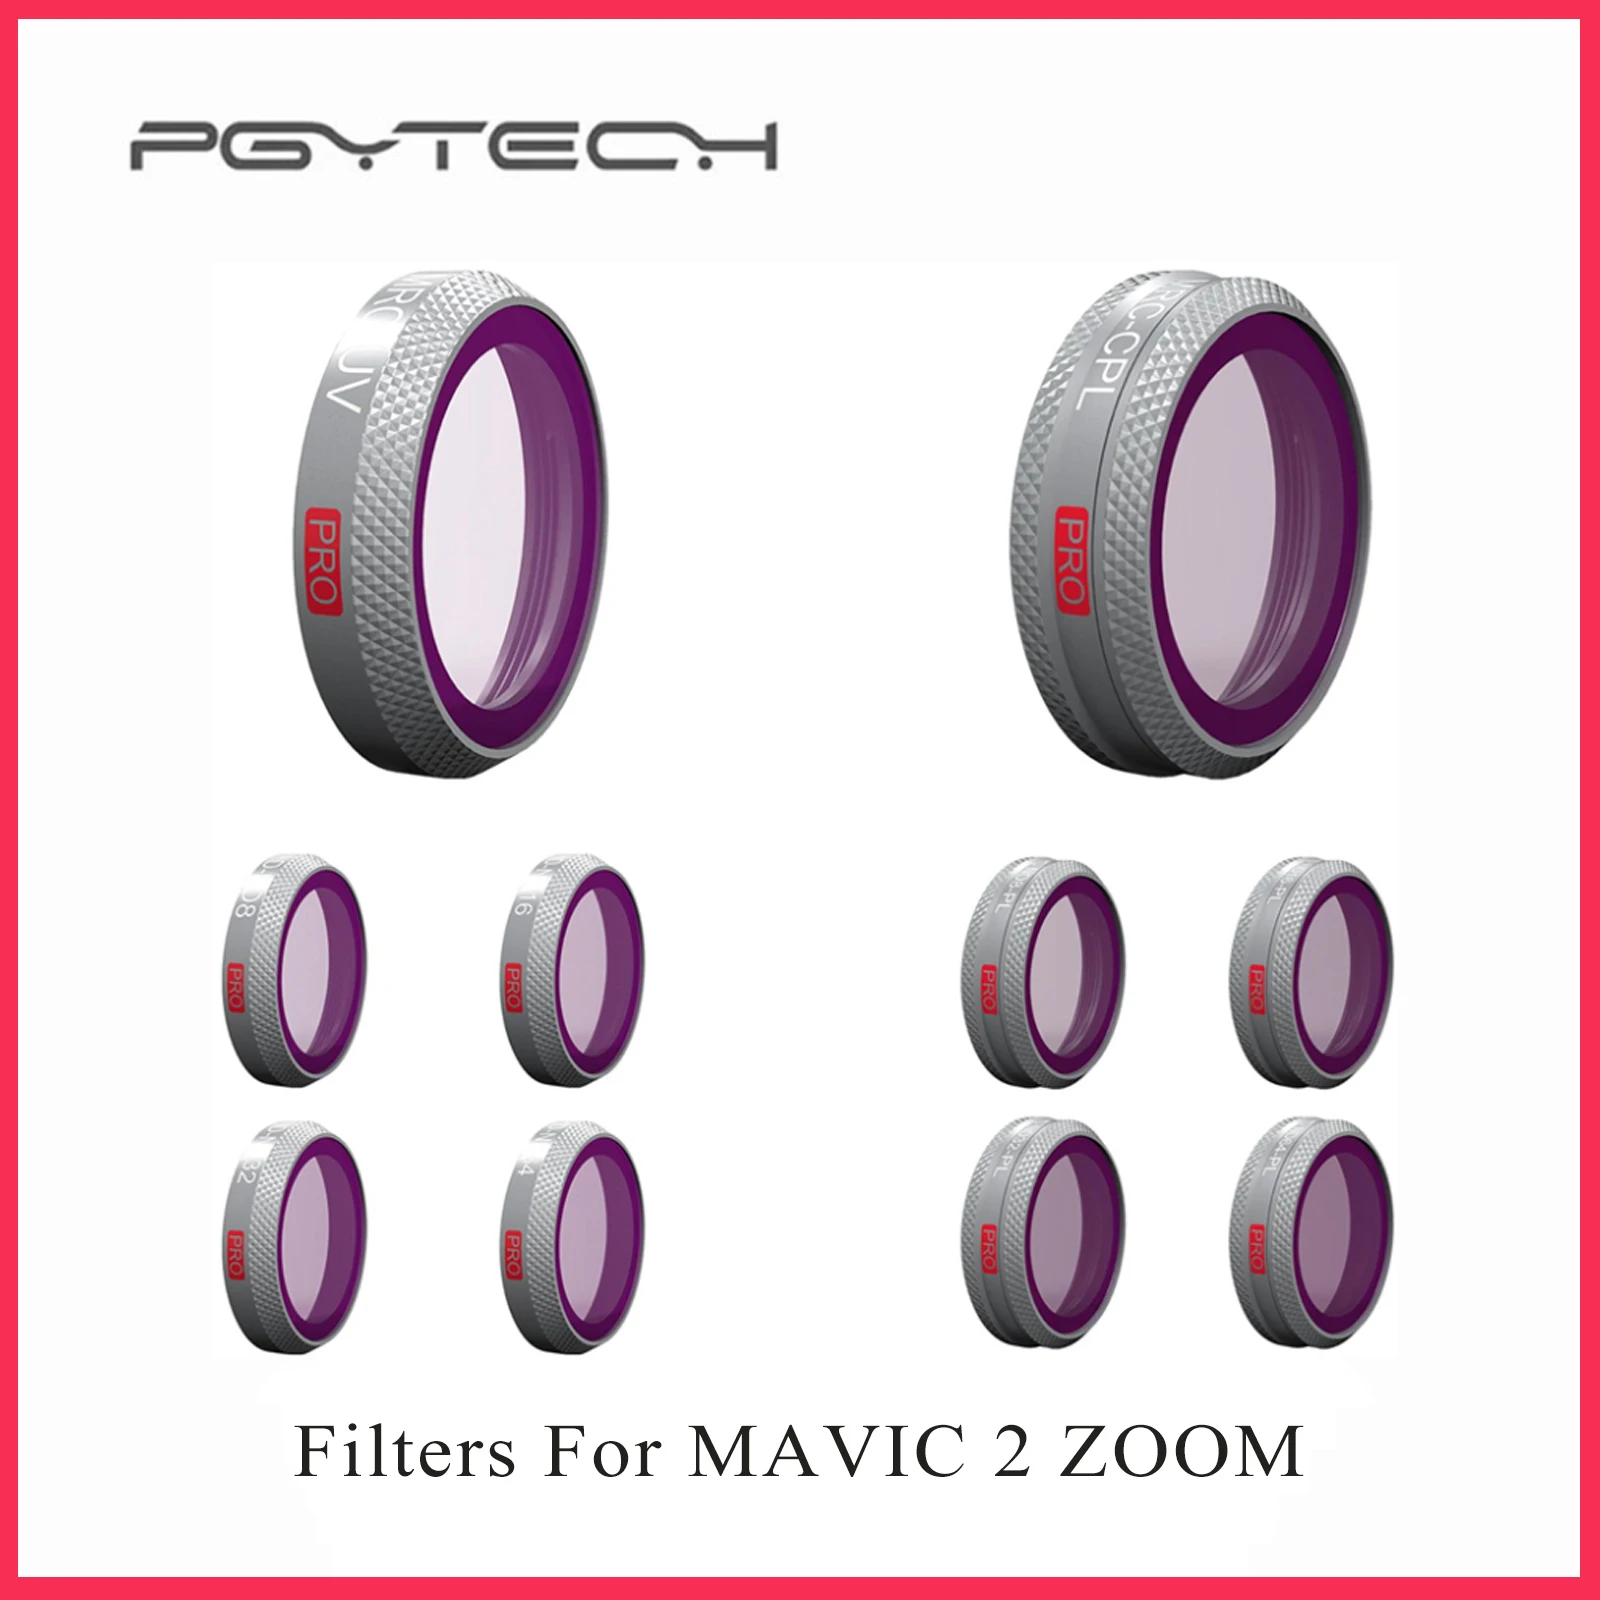 

Комплект фильтров PGYTECH Mavic 2 Zoom MRC UV/CPL/ND 8 16 32 64 PL ND8 ND16 ND32 ND64 для объектива Фильтры для камеры Mavic 2